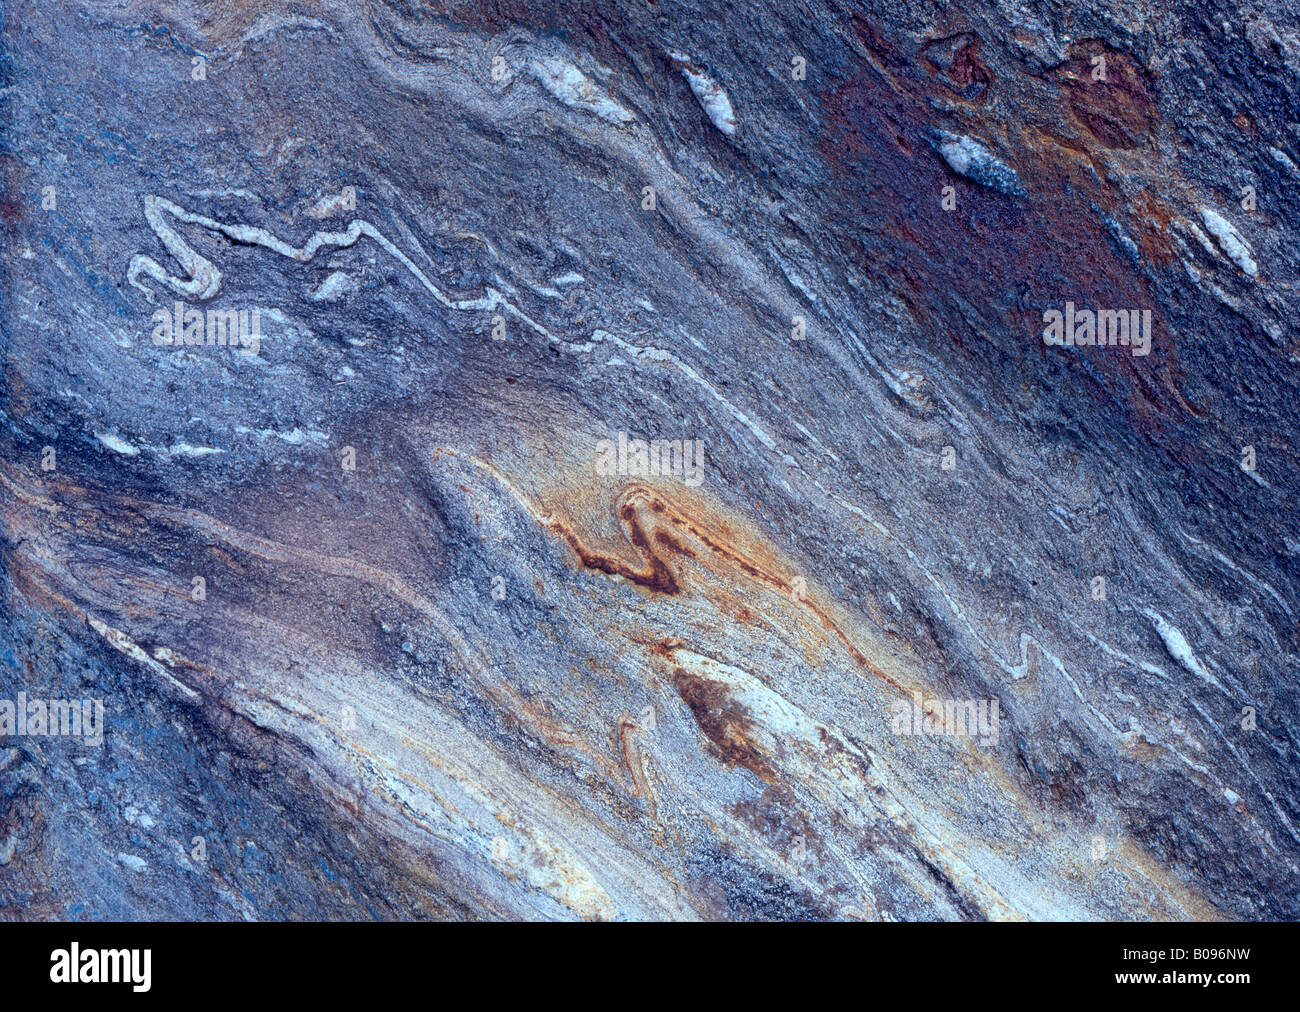 Textured rock surface, Tirol, Austria Stock Photo